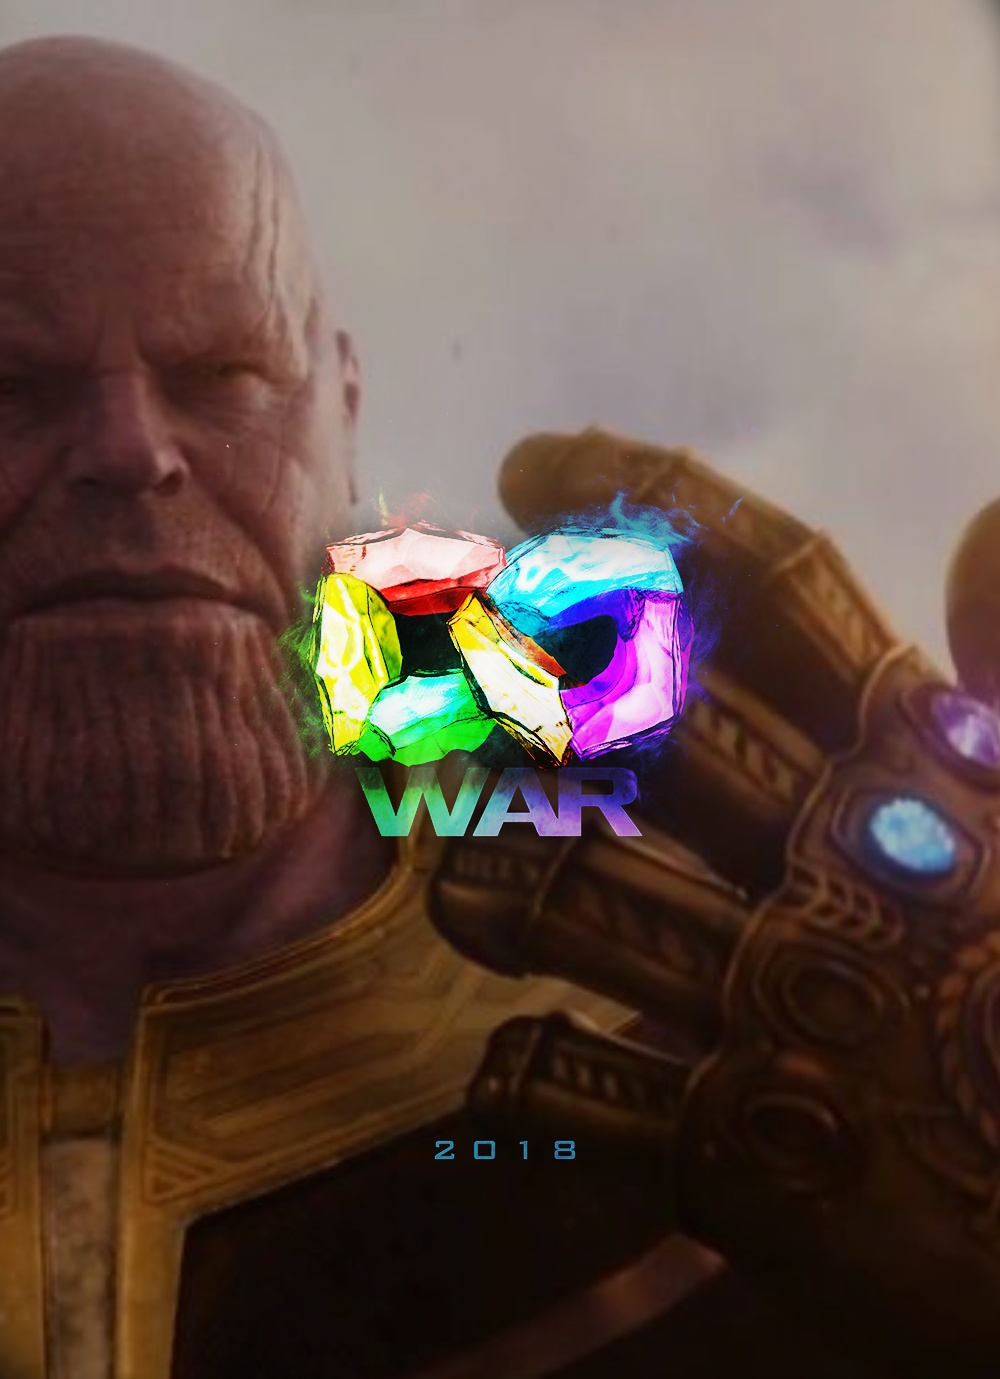 Infinity War: Thanos by deadmaninasuit